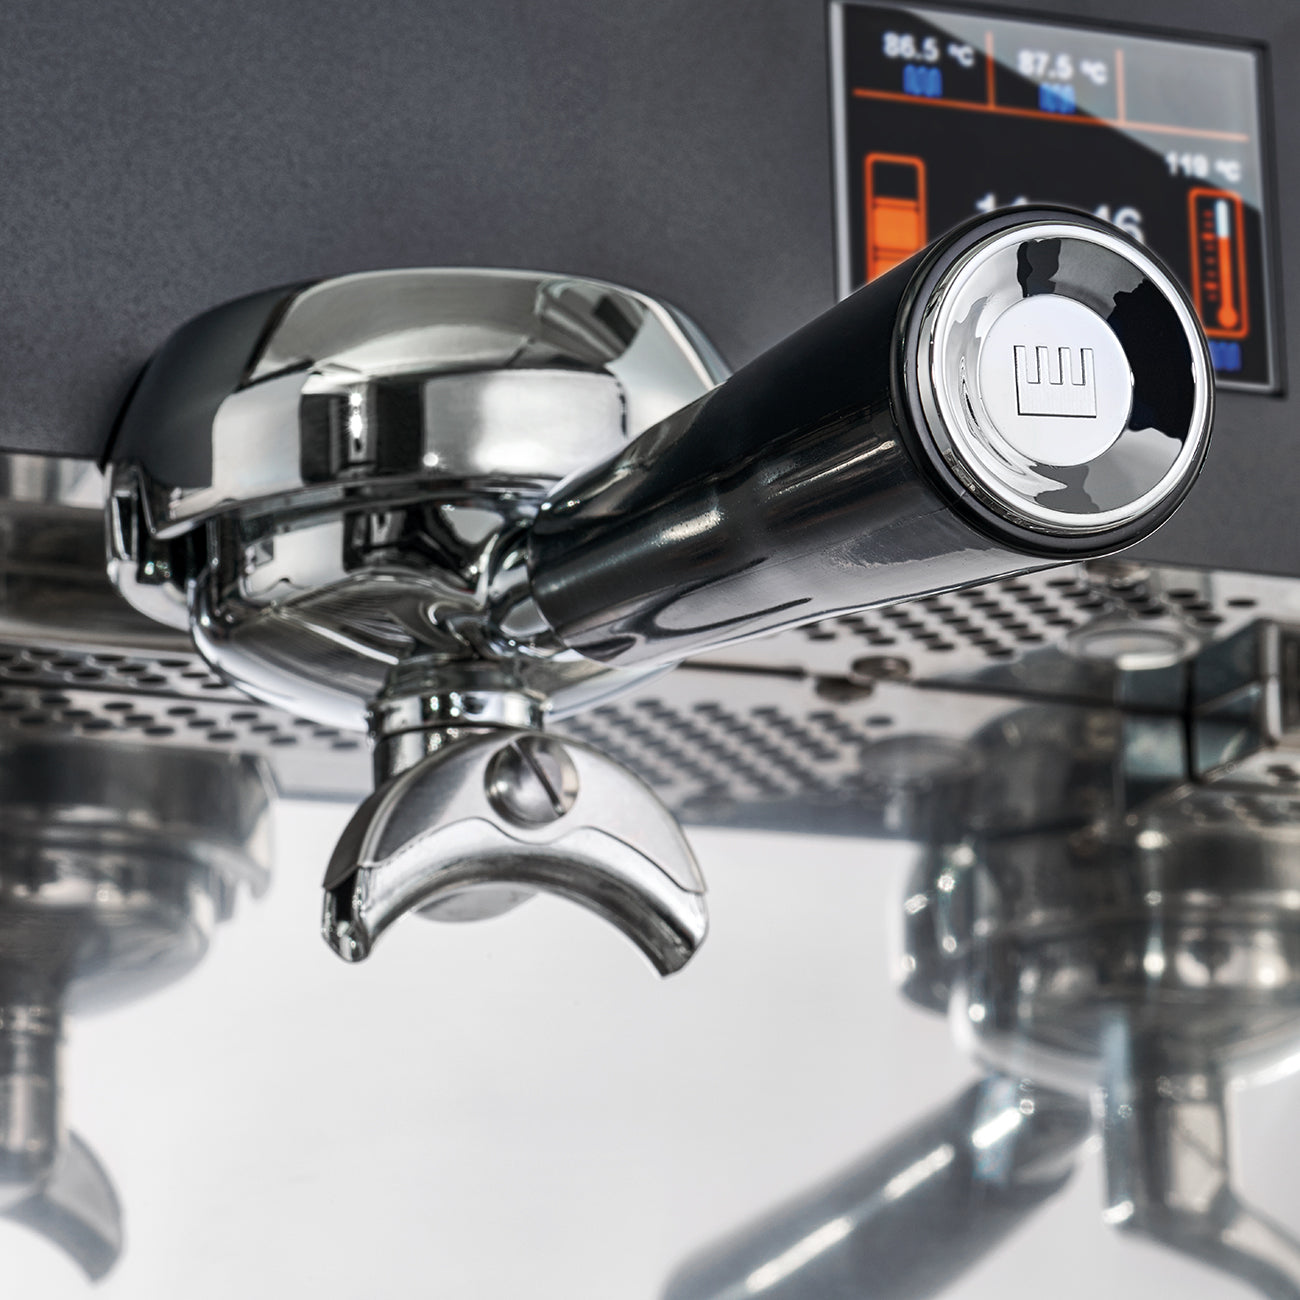 La Pavoni - DESIDERIO 2V - 2 Group espresso coffee machine JD Catering Equipment Solutions Ltd